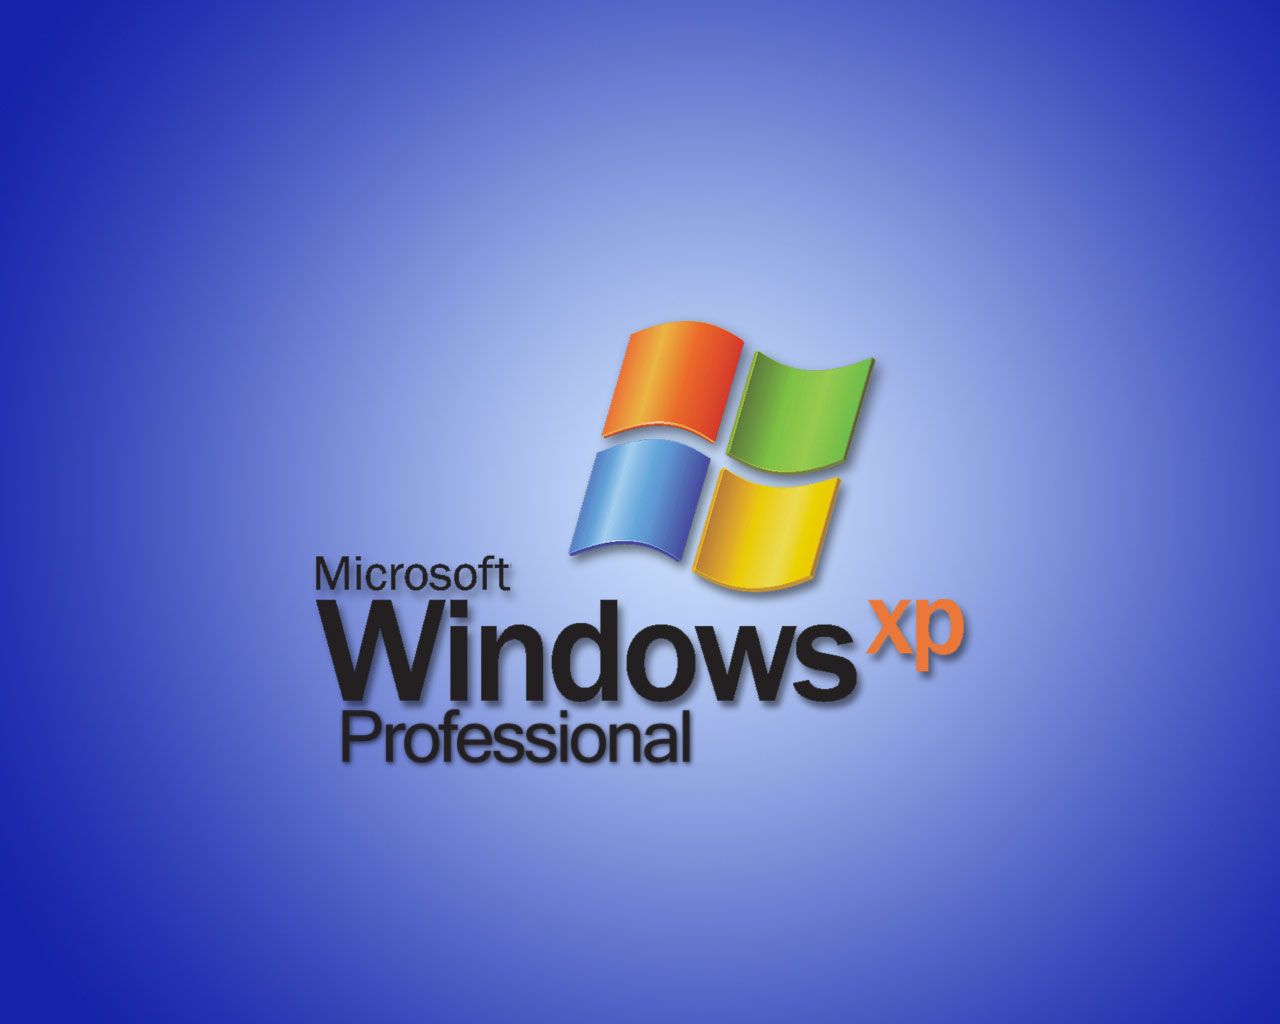 Microsoft Windows Xp Professional Wallpaper Best